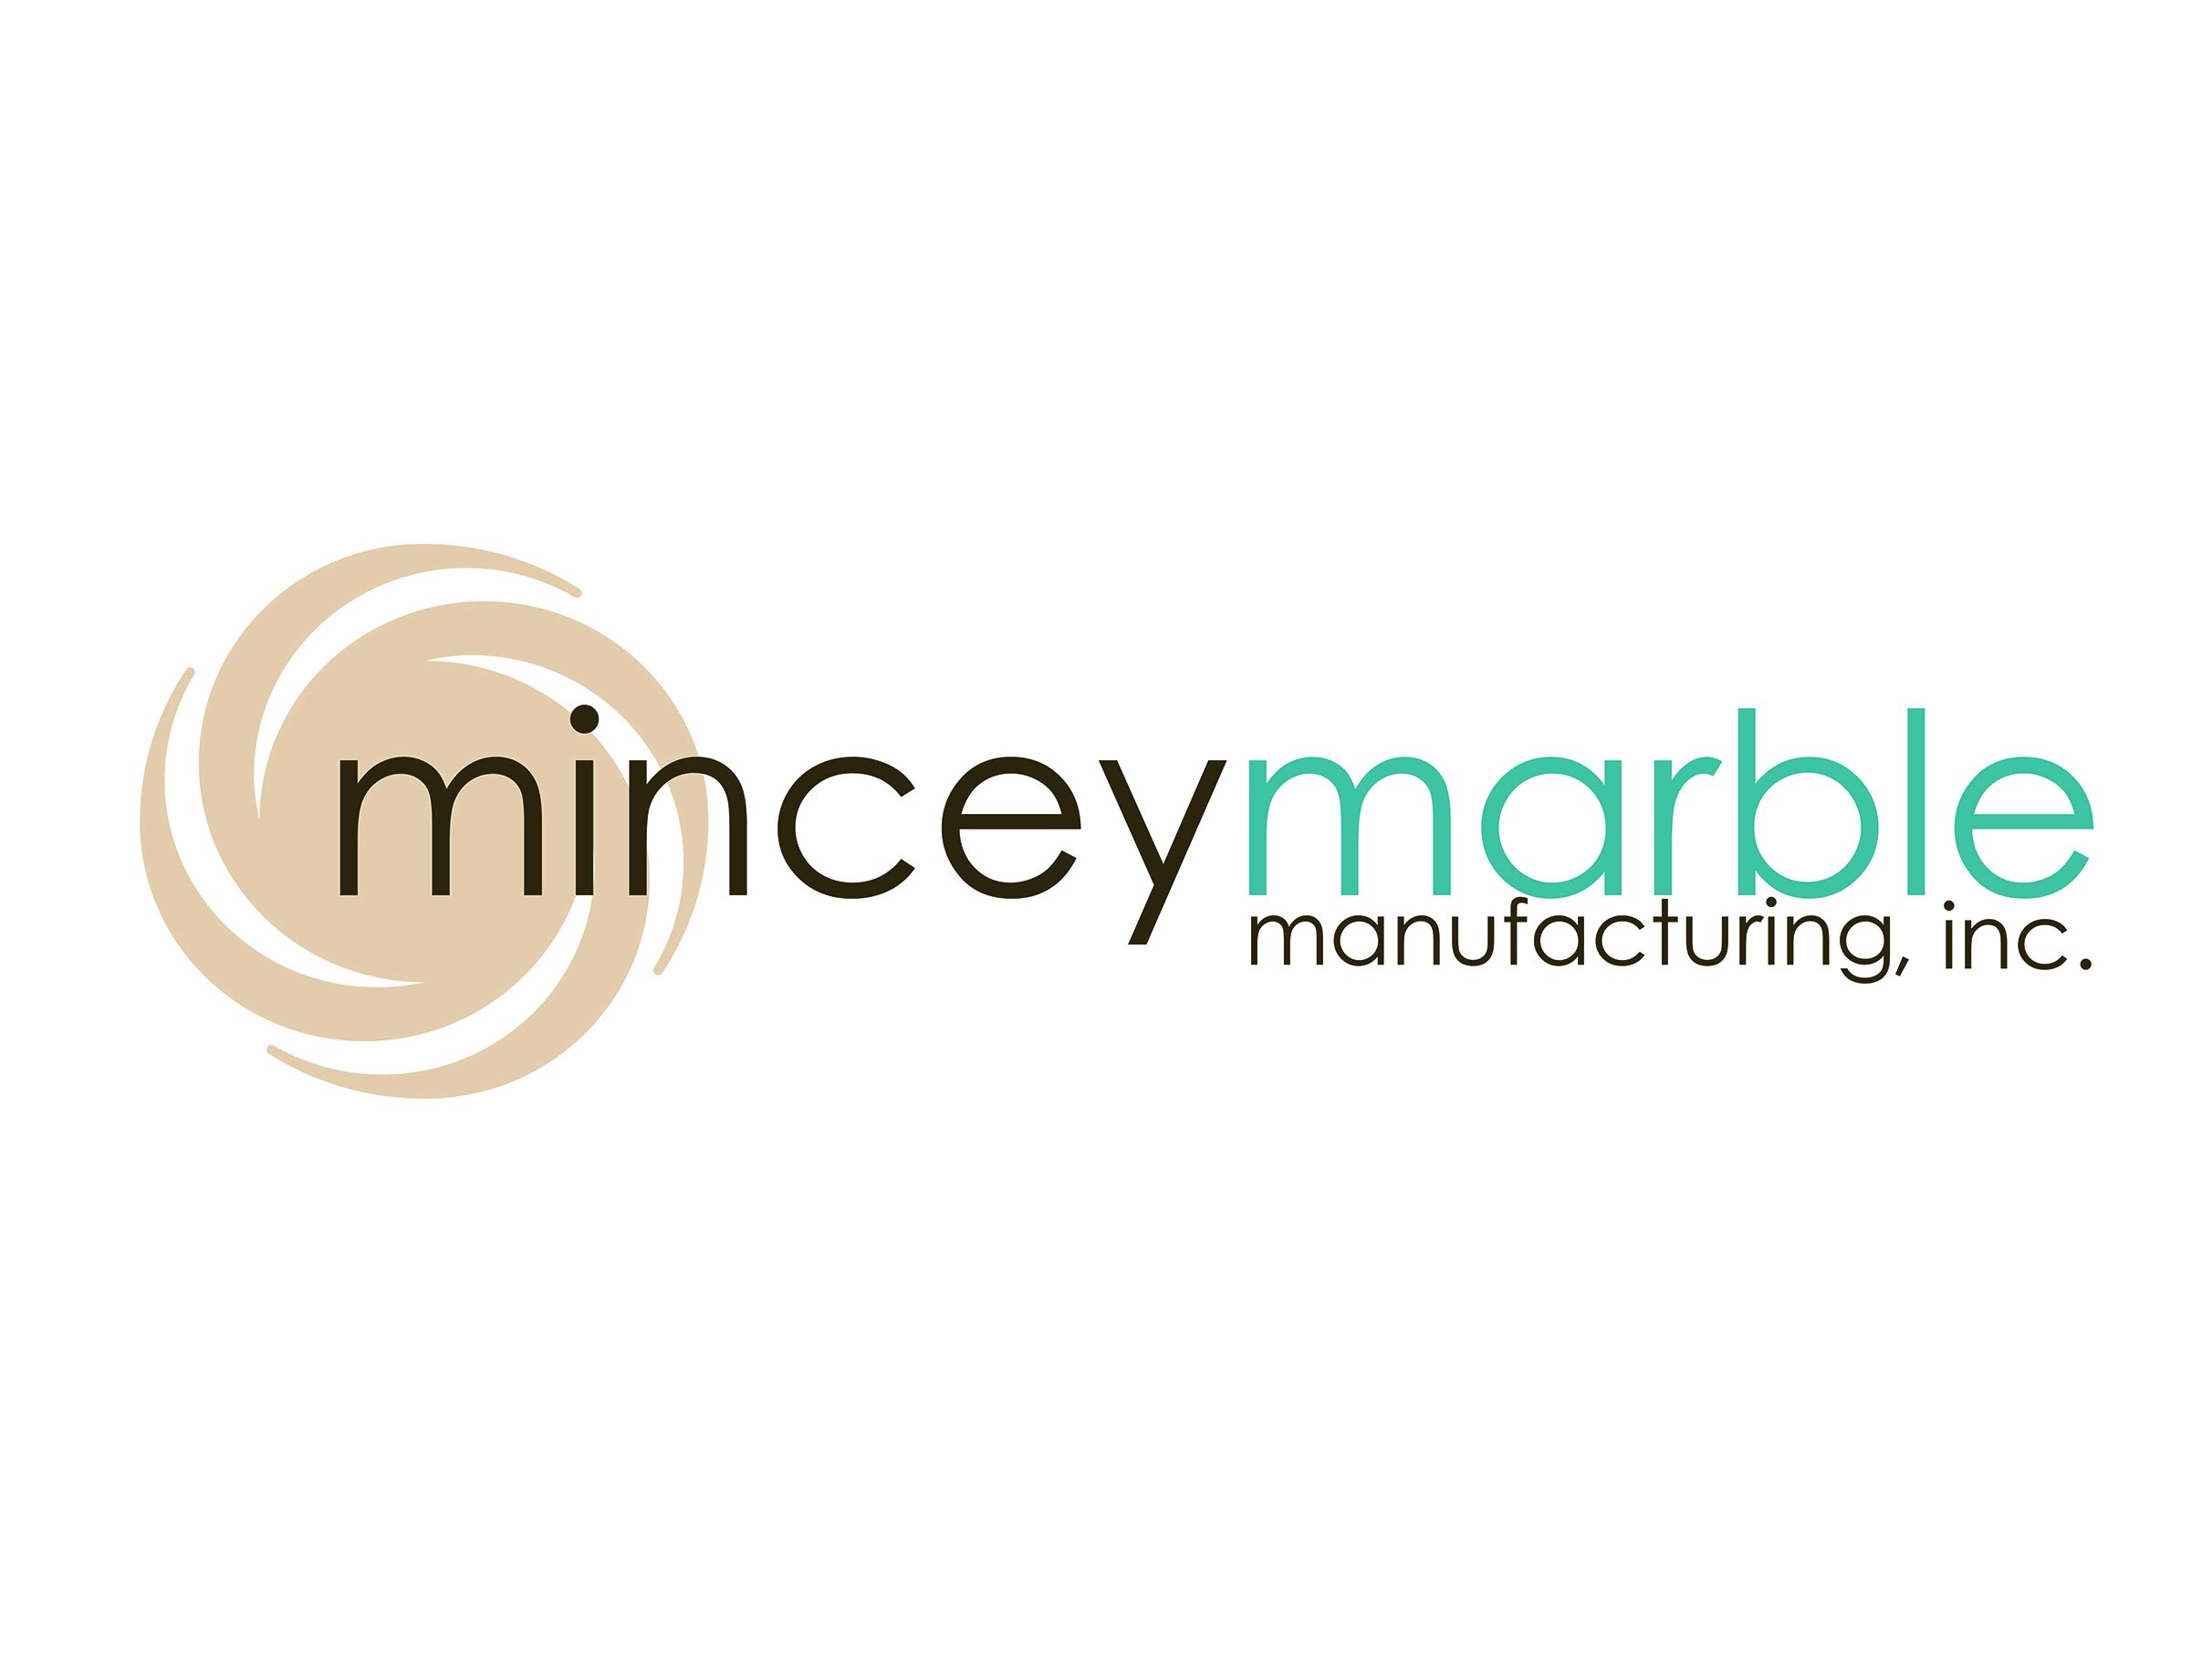 Mincey Marble Manufacturing Inc Logo - CMYK - highrez - 010422.jpg